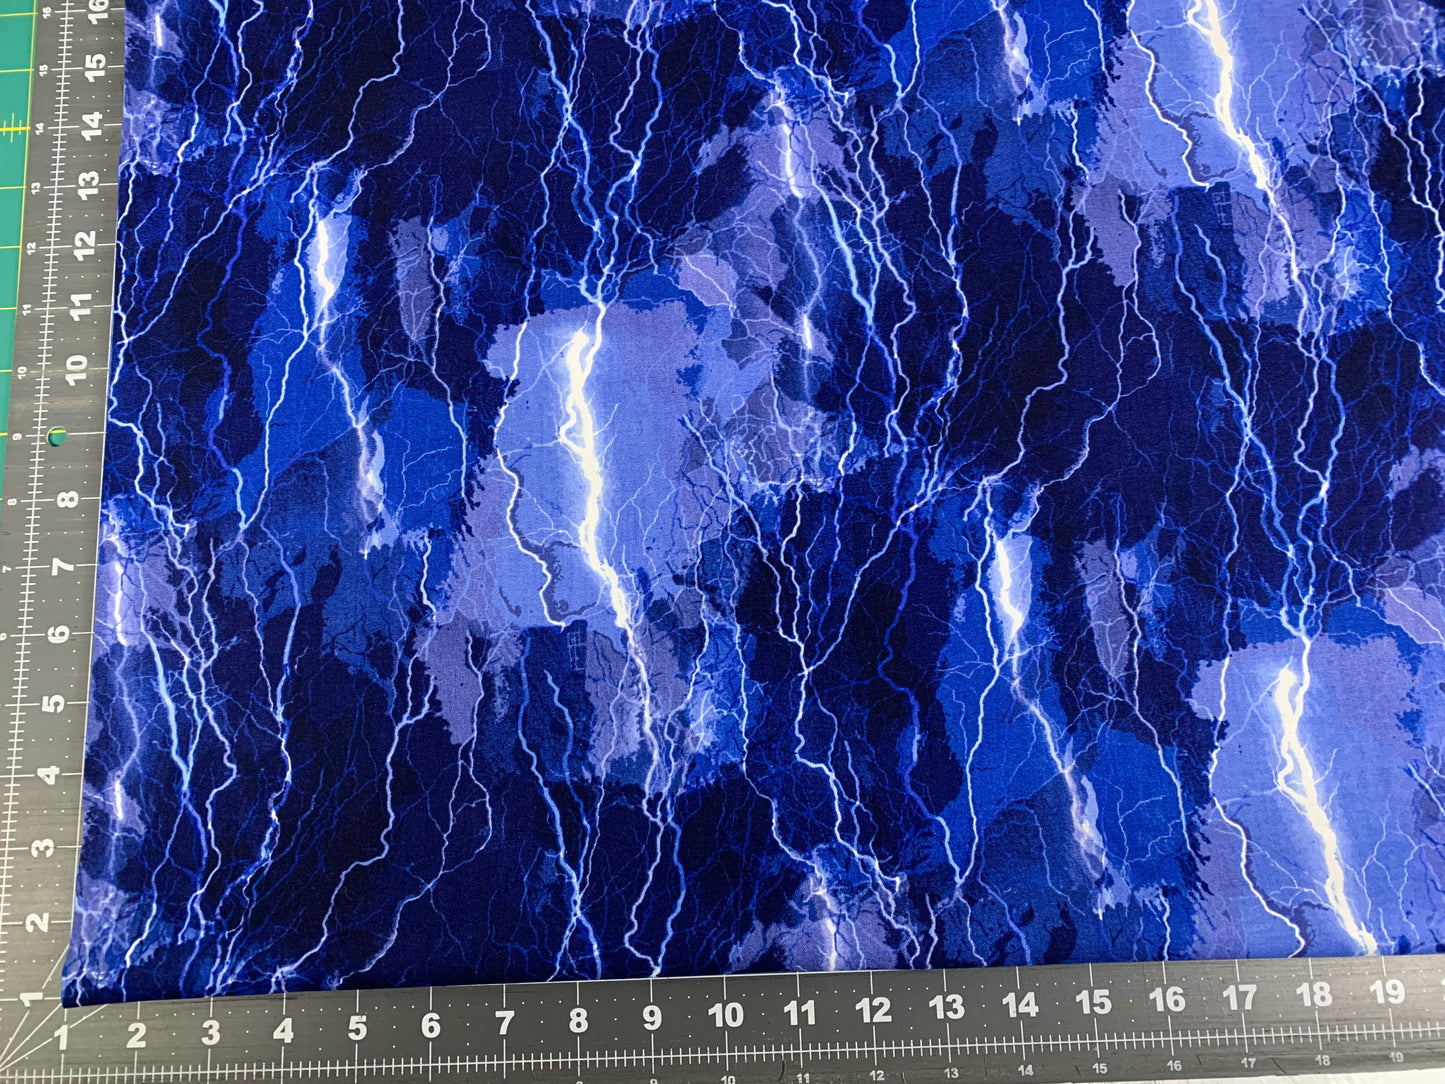 Lightning Storm fabric C8410 Night sky fabric